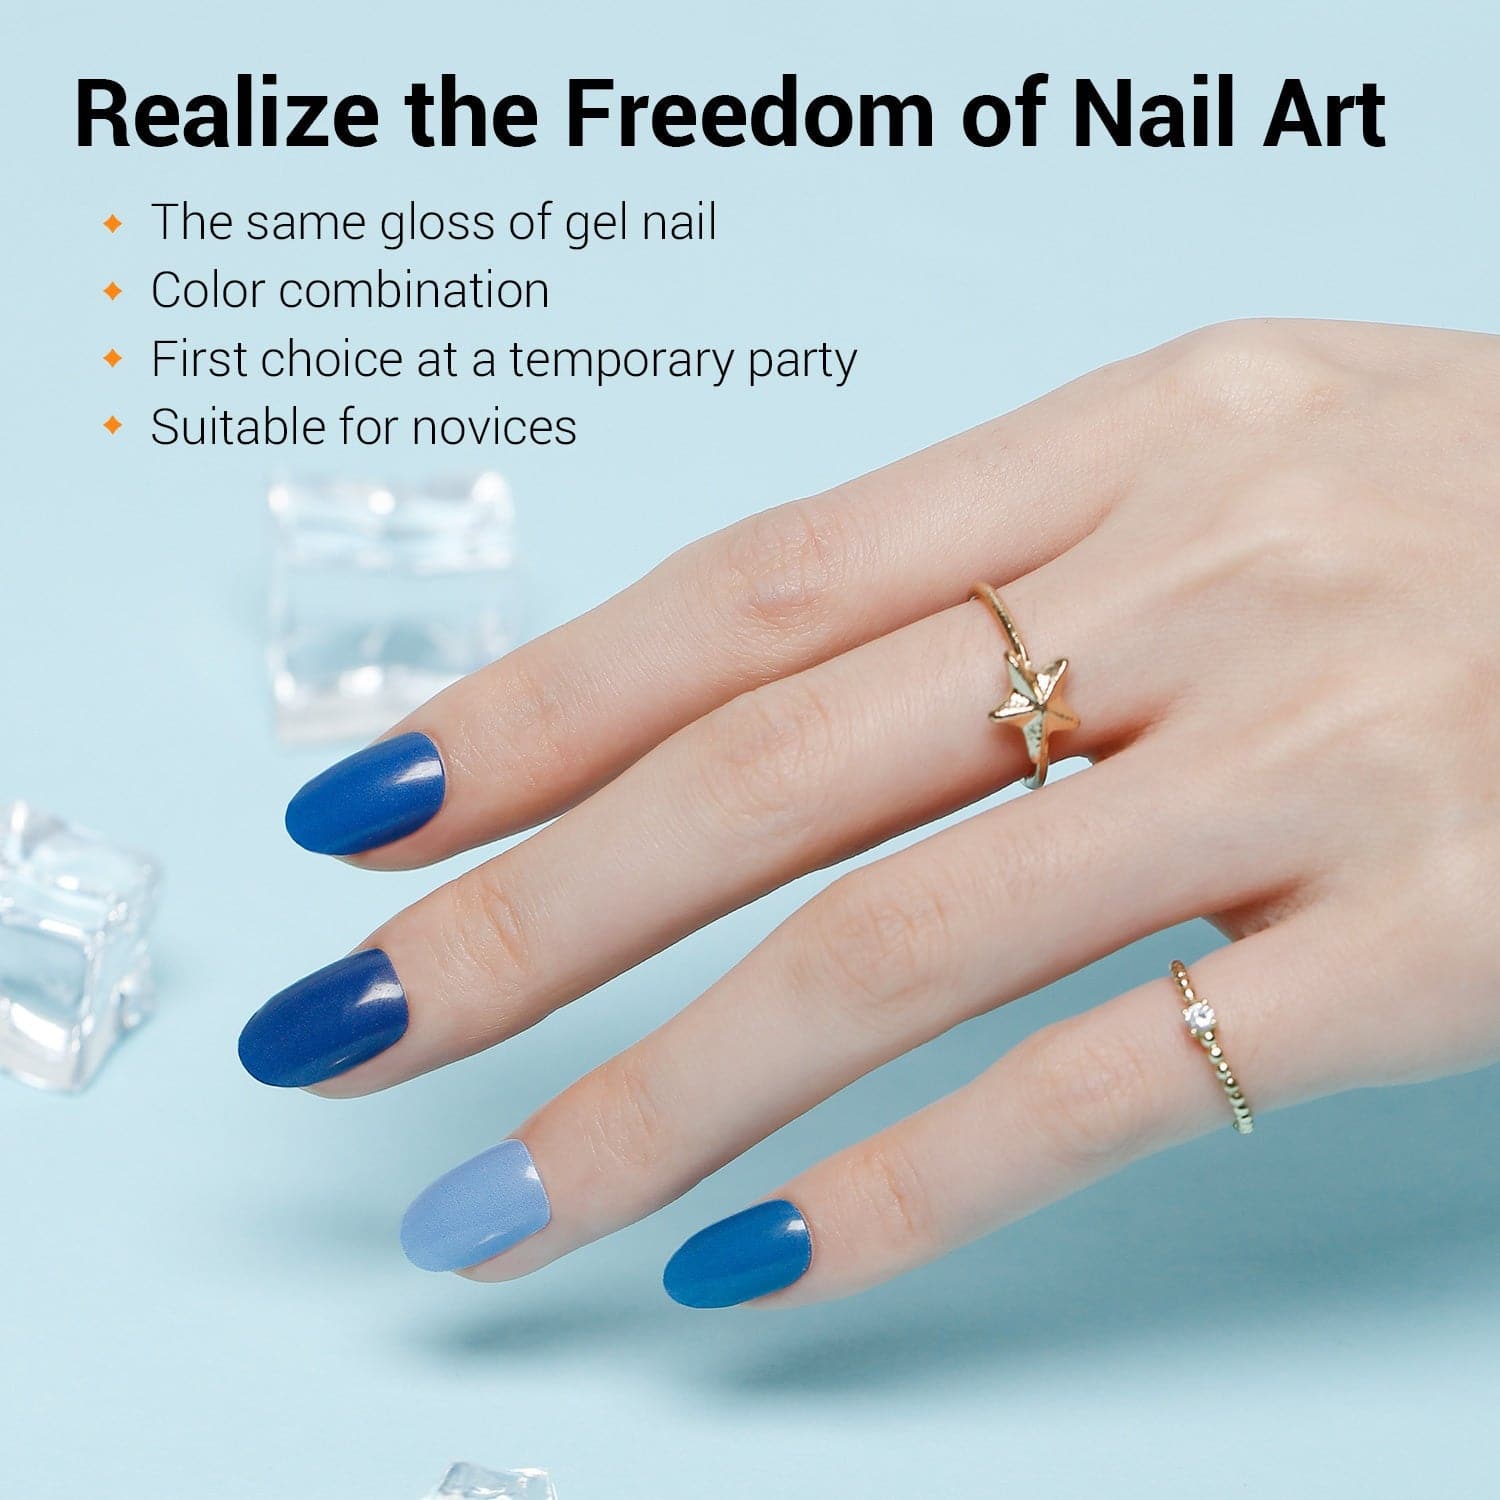 In the Ocean - Semi-Cured Gel Nail Strips - MODELONES.com